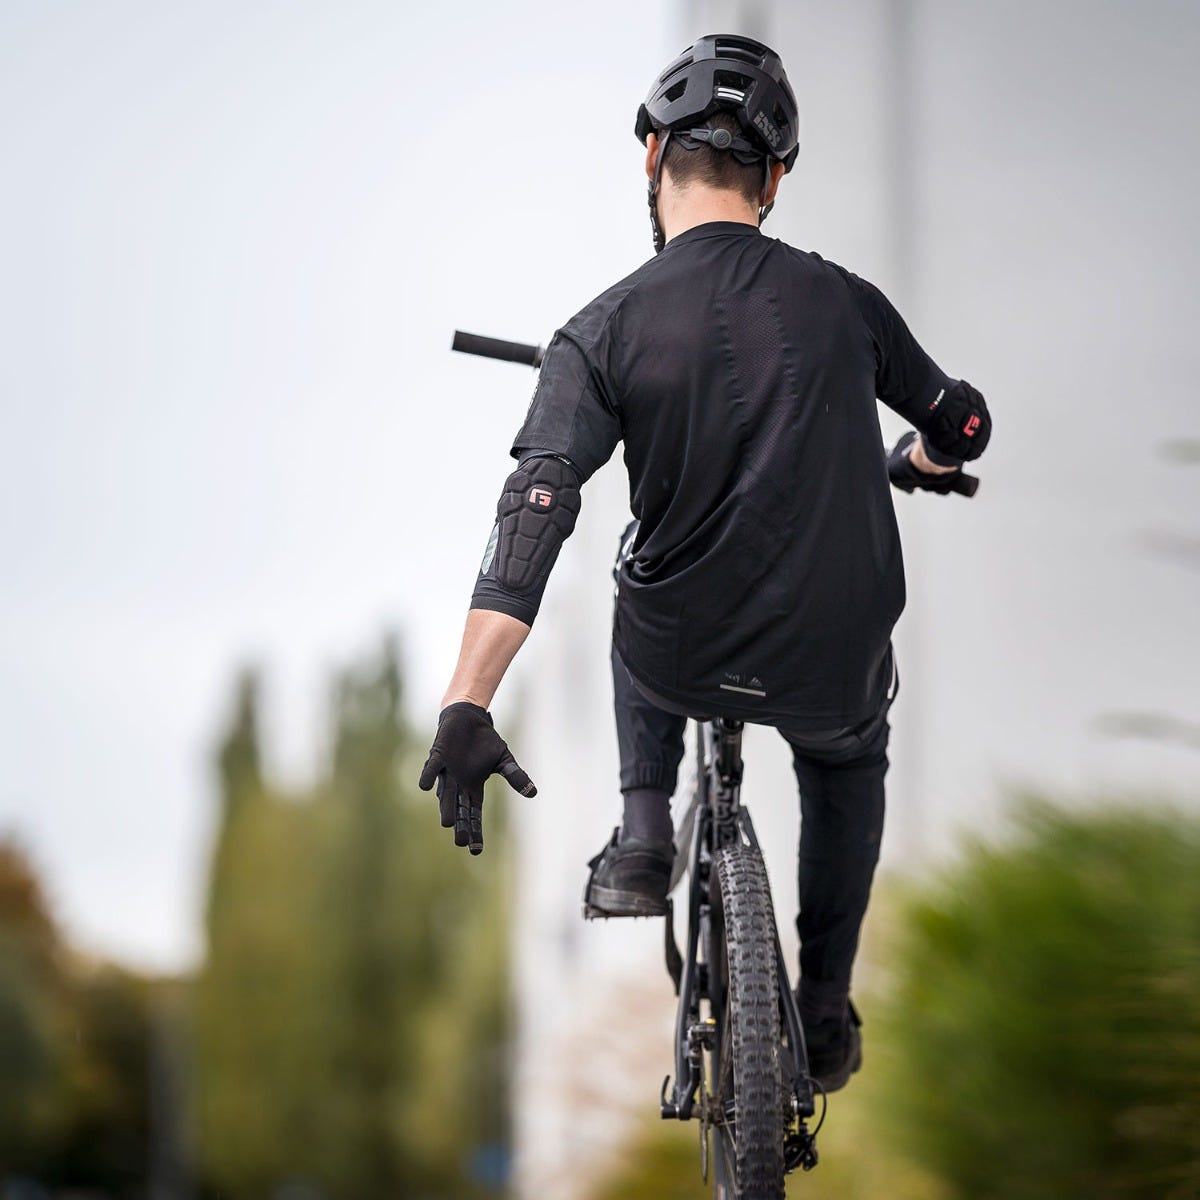 Best elbow pads for mountain biking: Lightweight to heavy duty